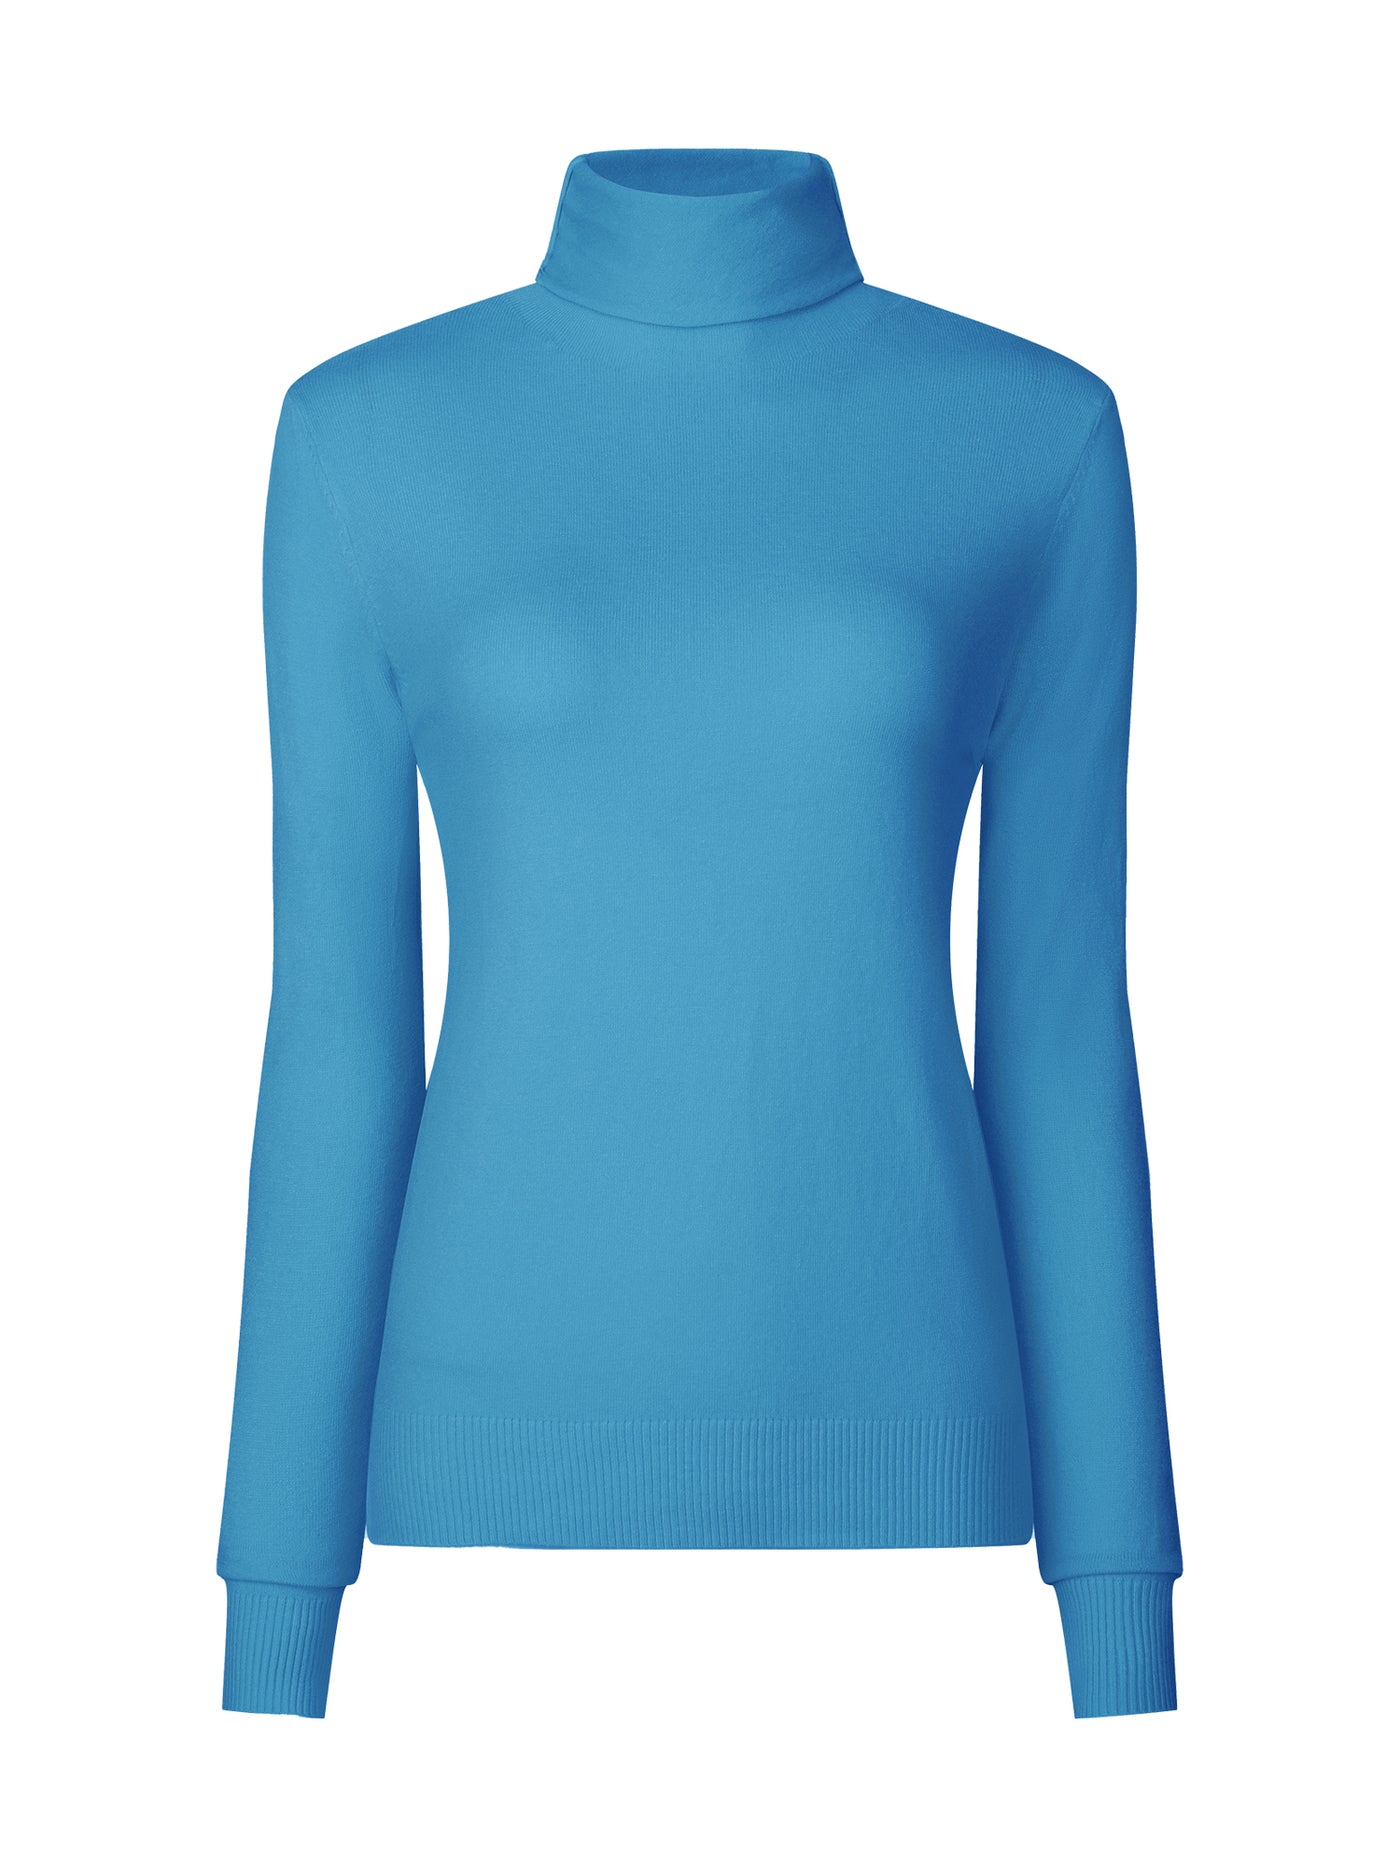 Bublédon Women's Pullover Sweater Top Long Sleeve Turtleneck Knit Tops